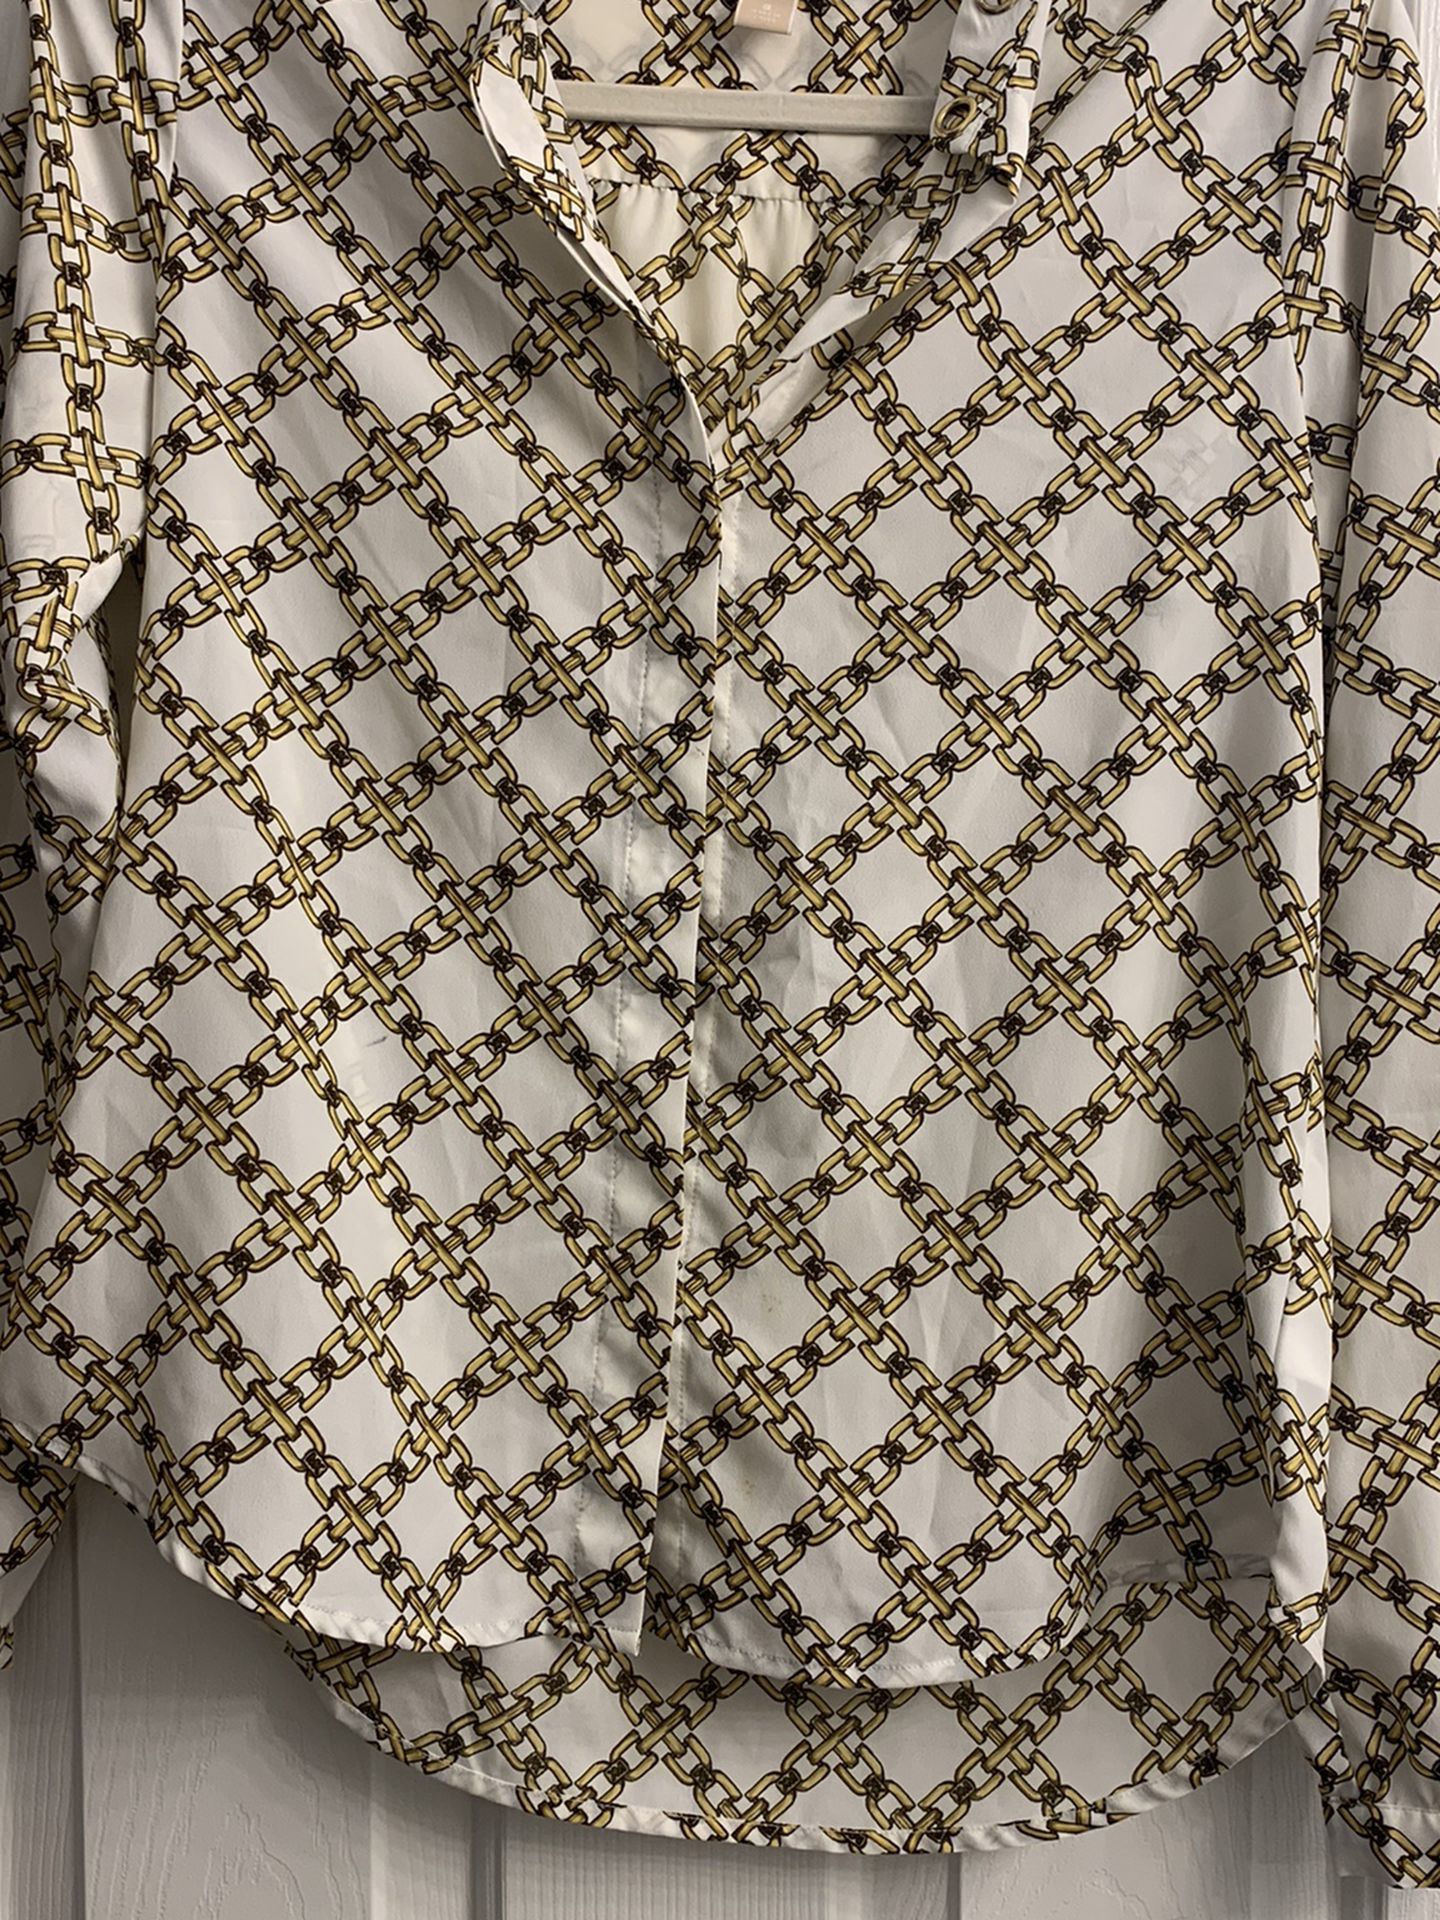 Michael Kors Shirt